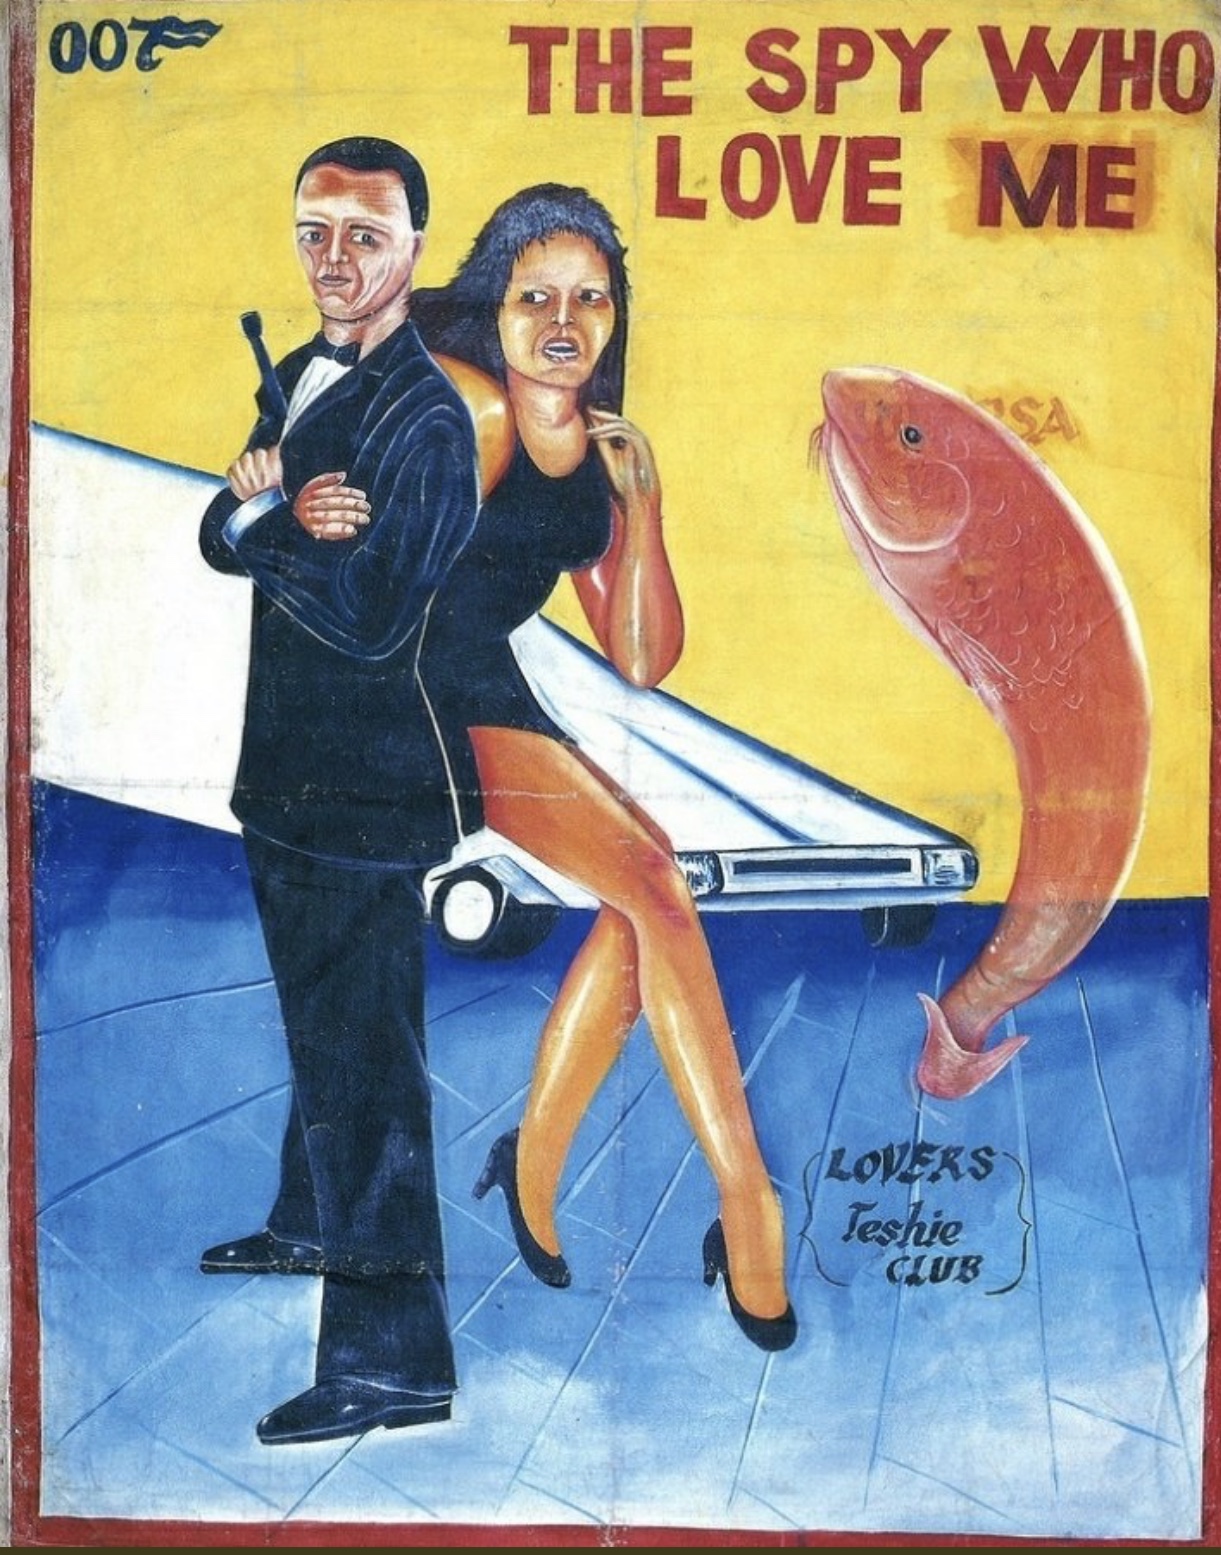 ghanaian movie posters - 007 The Spy Who Love Me Lovers Jeshie Club